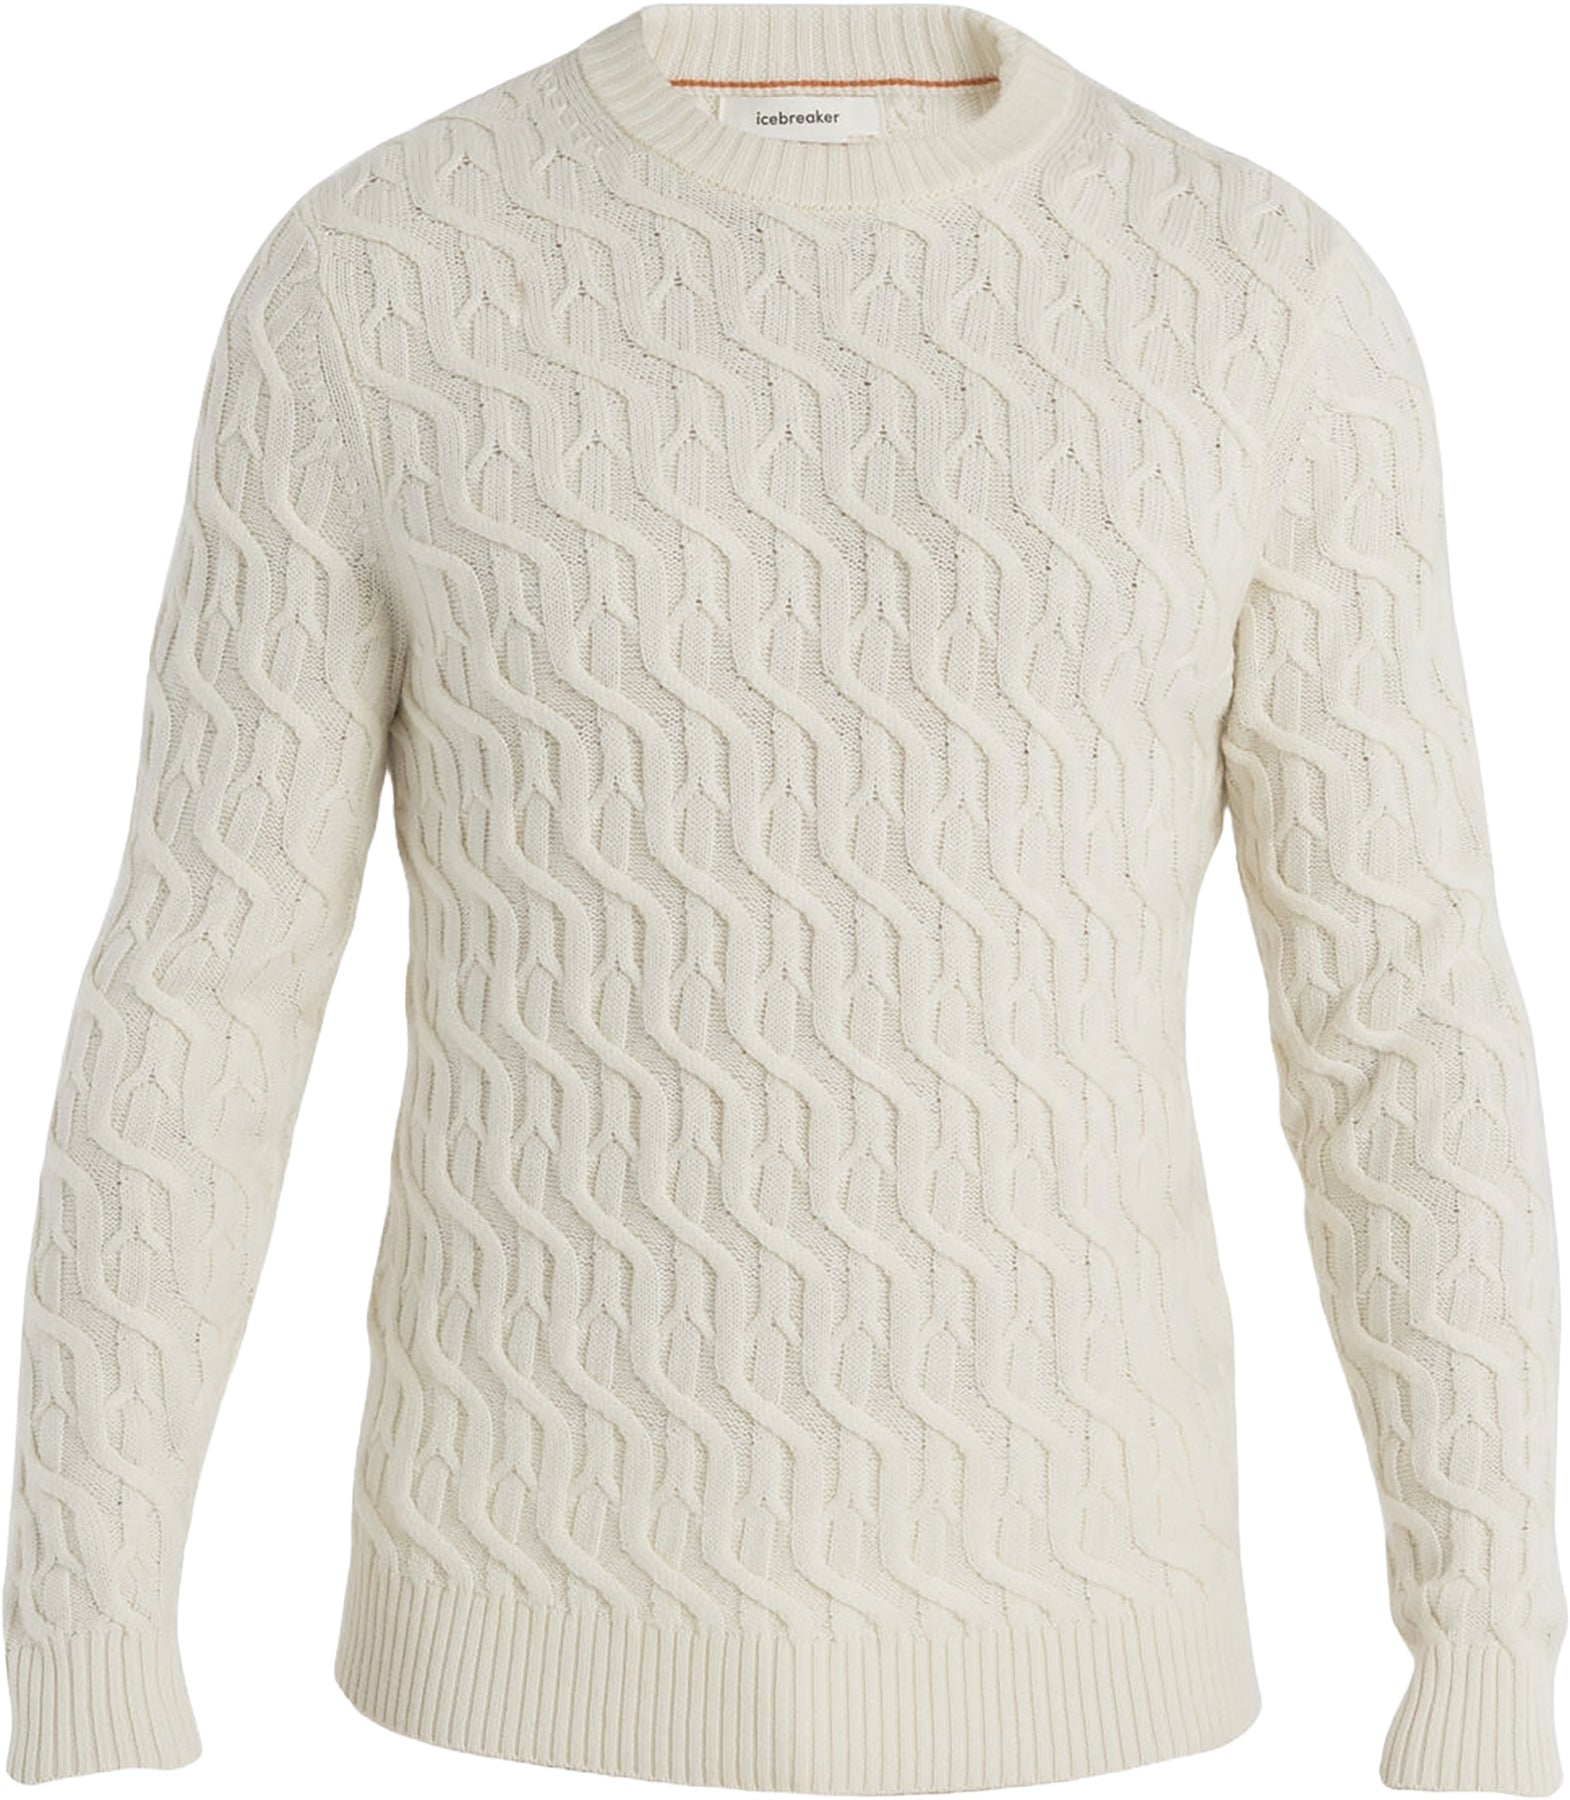 icebreaker Merino Cable Knit Crewe Sweater - Men's